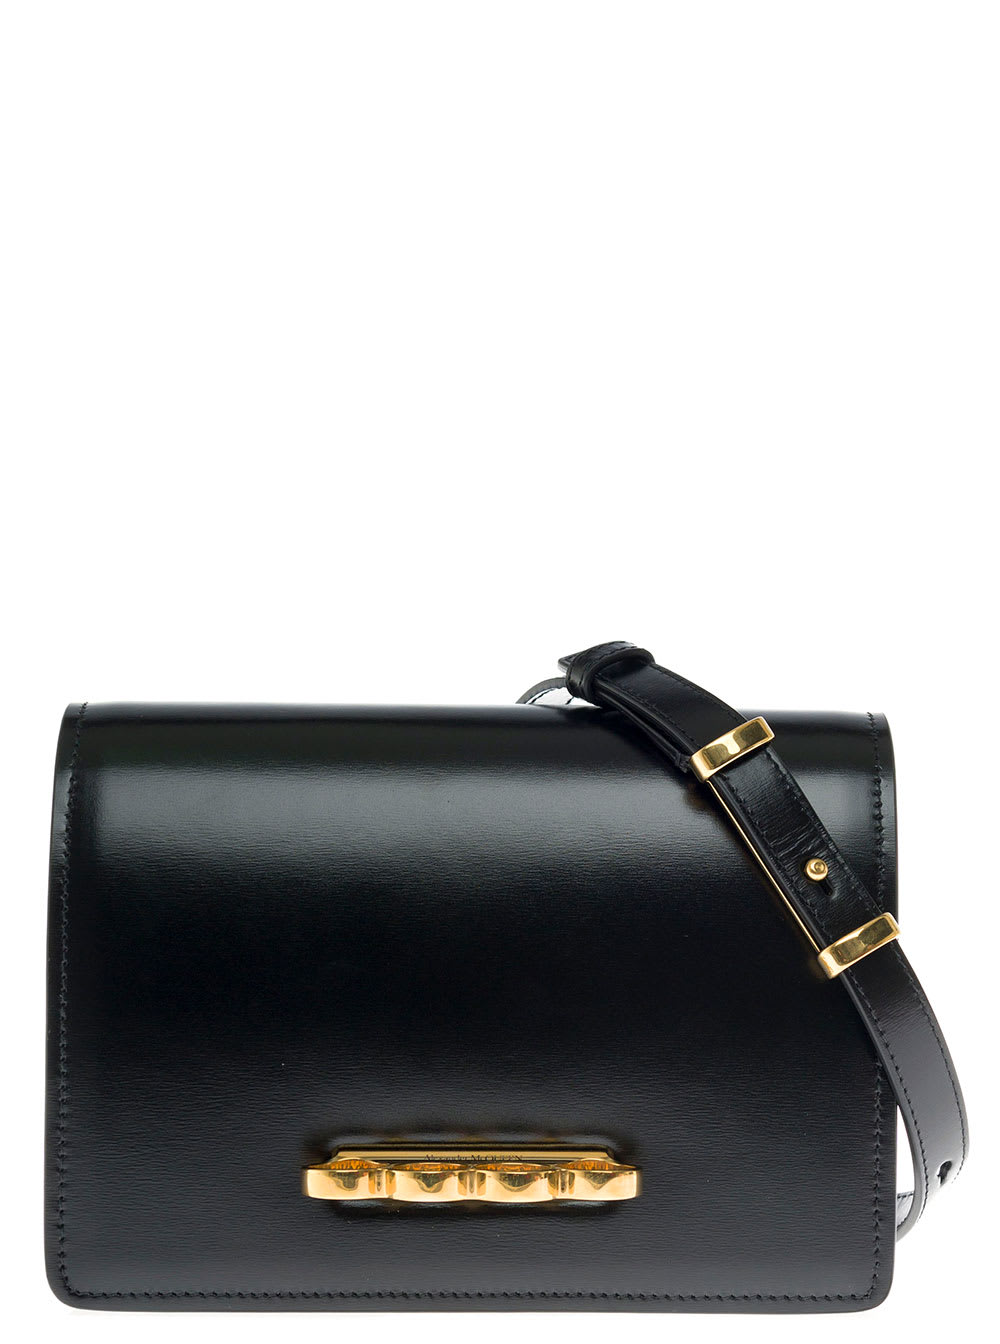 Alexander McQueen Four Ring Satchel Black Leather Crossbody Bag